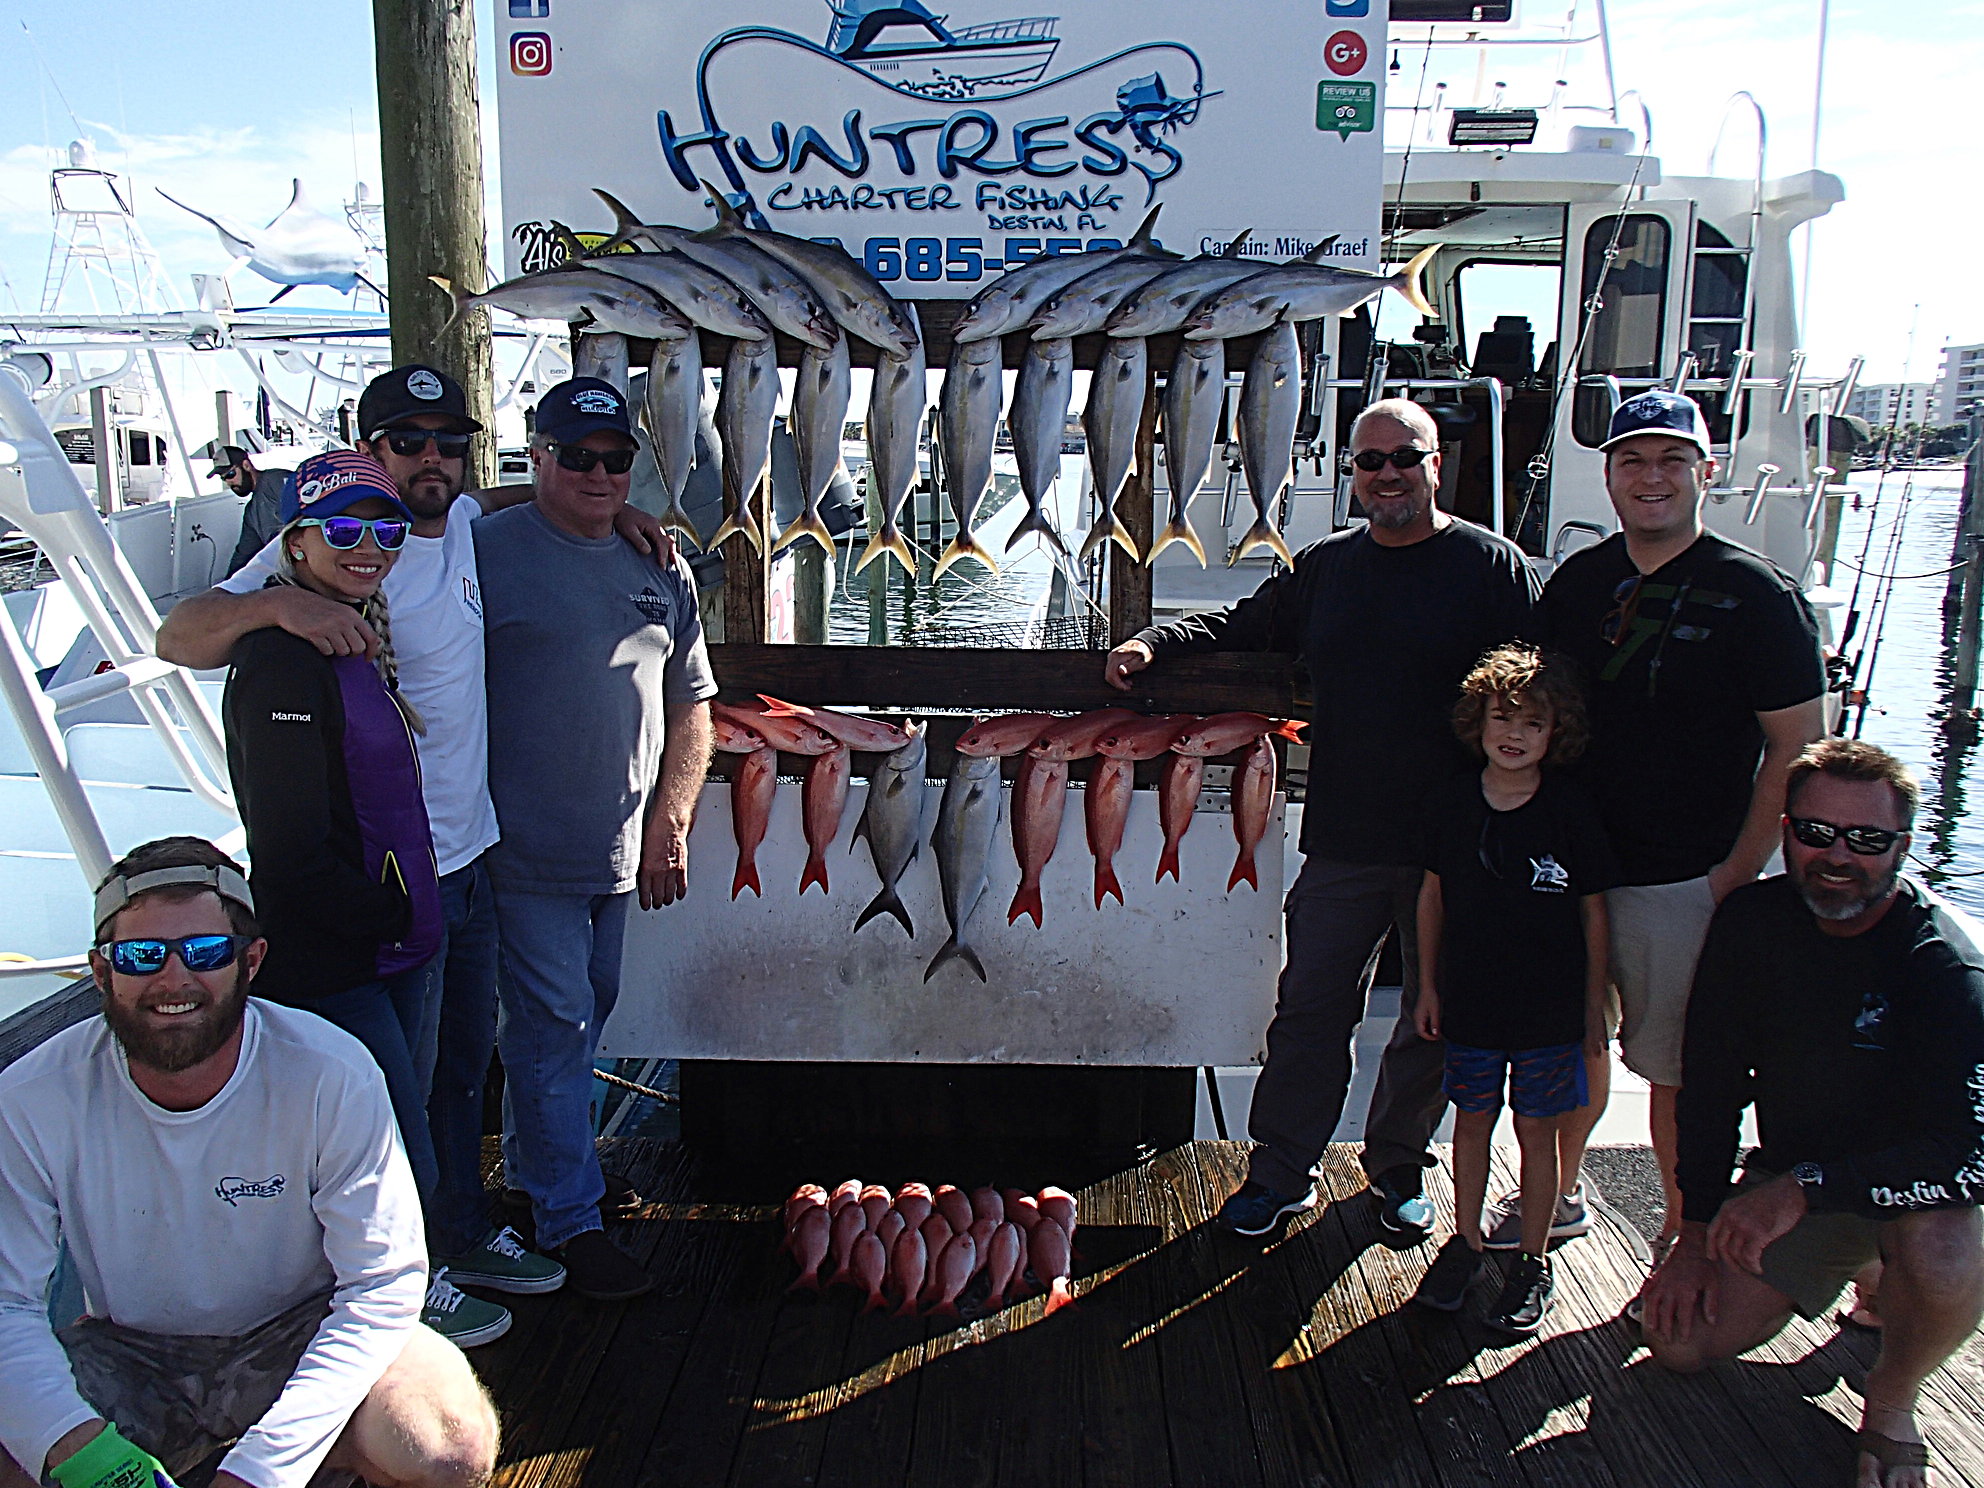 Destin Florida Winter Fishing Charter